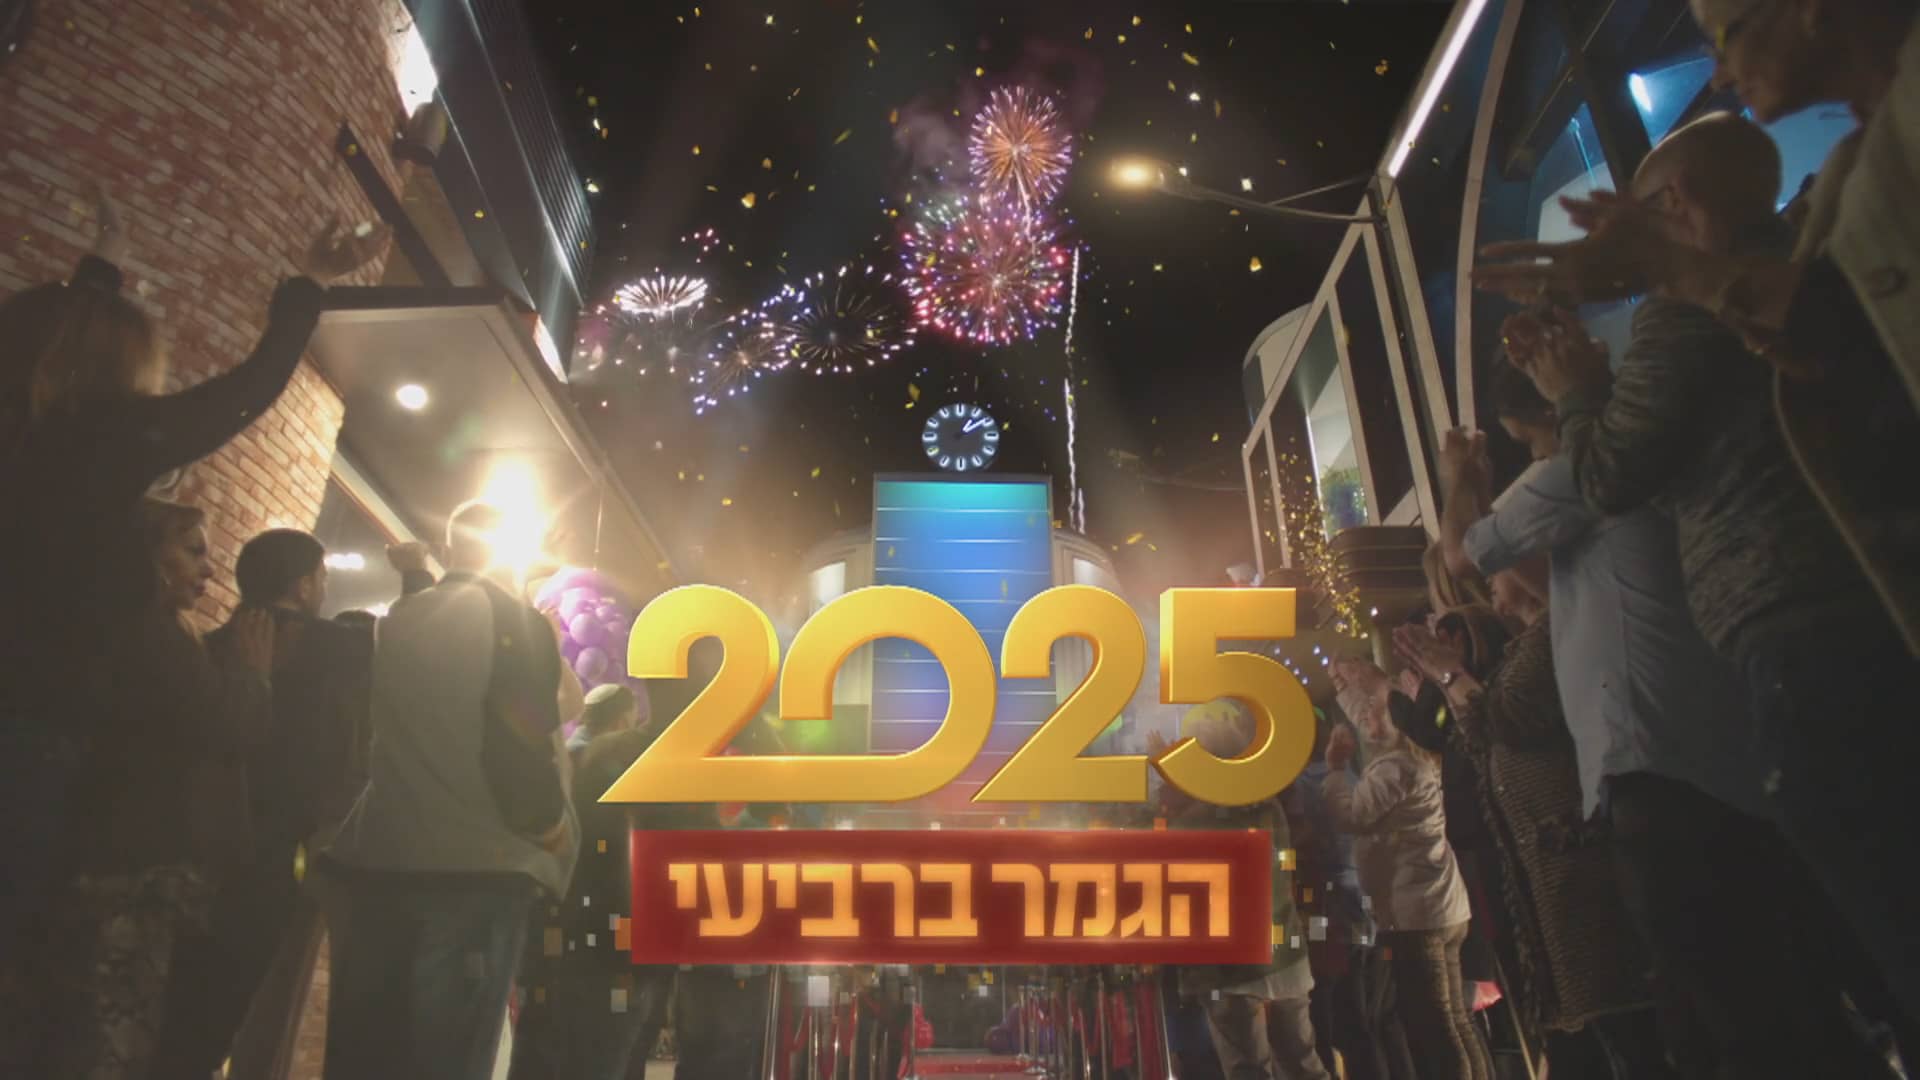 Promo 2025 FINALS by Keshet on Vimeo